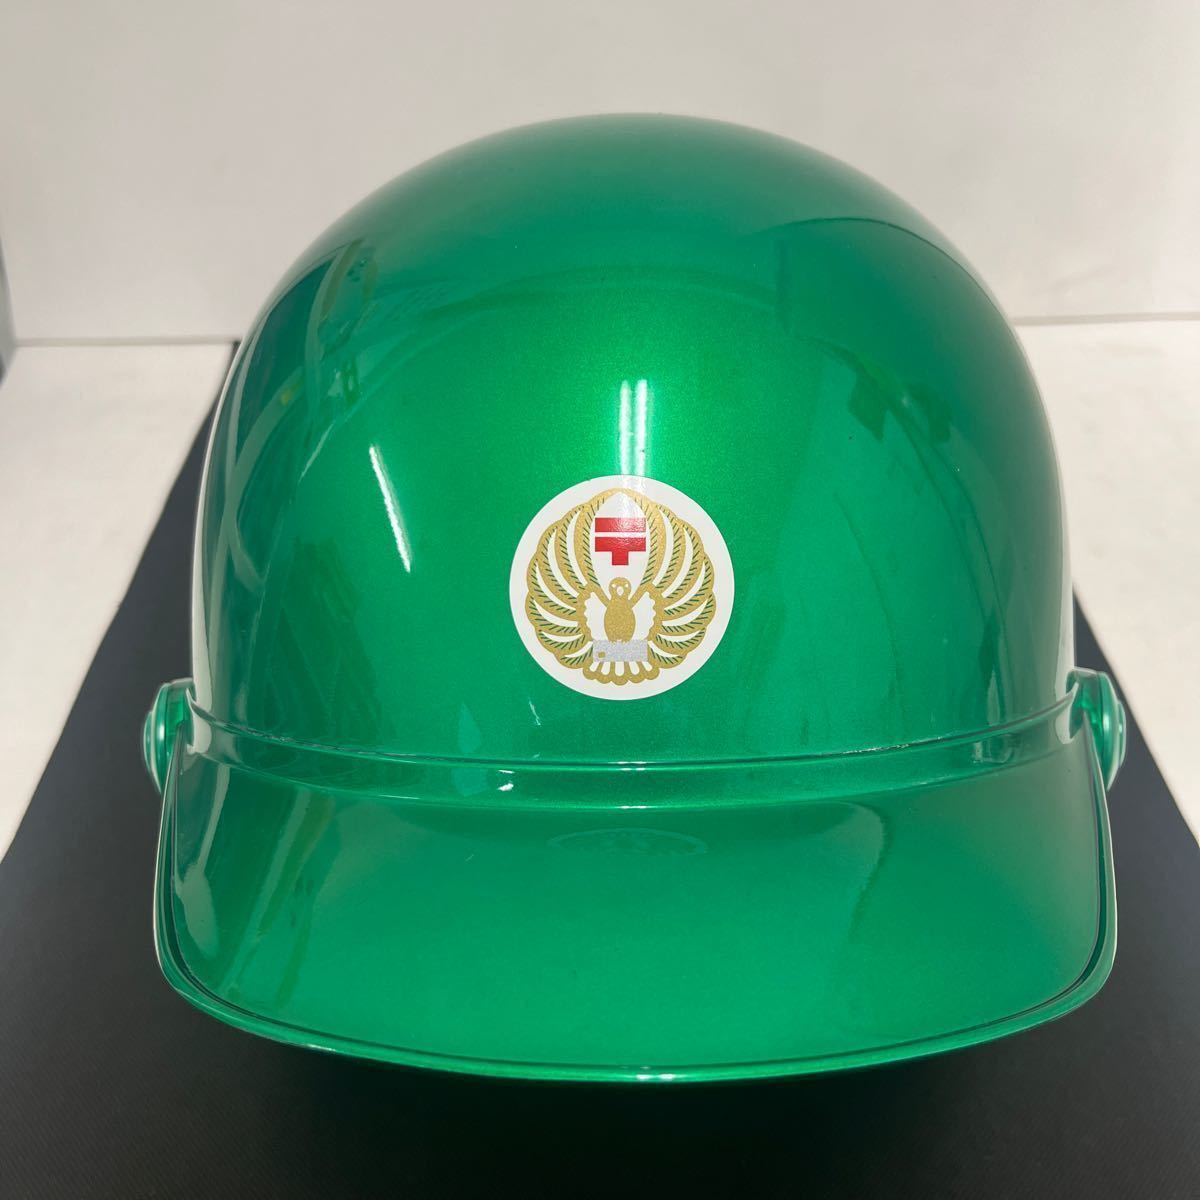  postal helmet . car safety cap no. A type 125cc and downward for emergency . for postal . settled .2 number type green helmet helmet rare ( control 2)